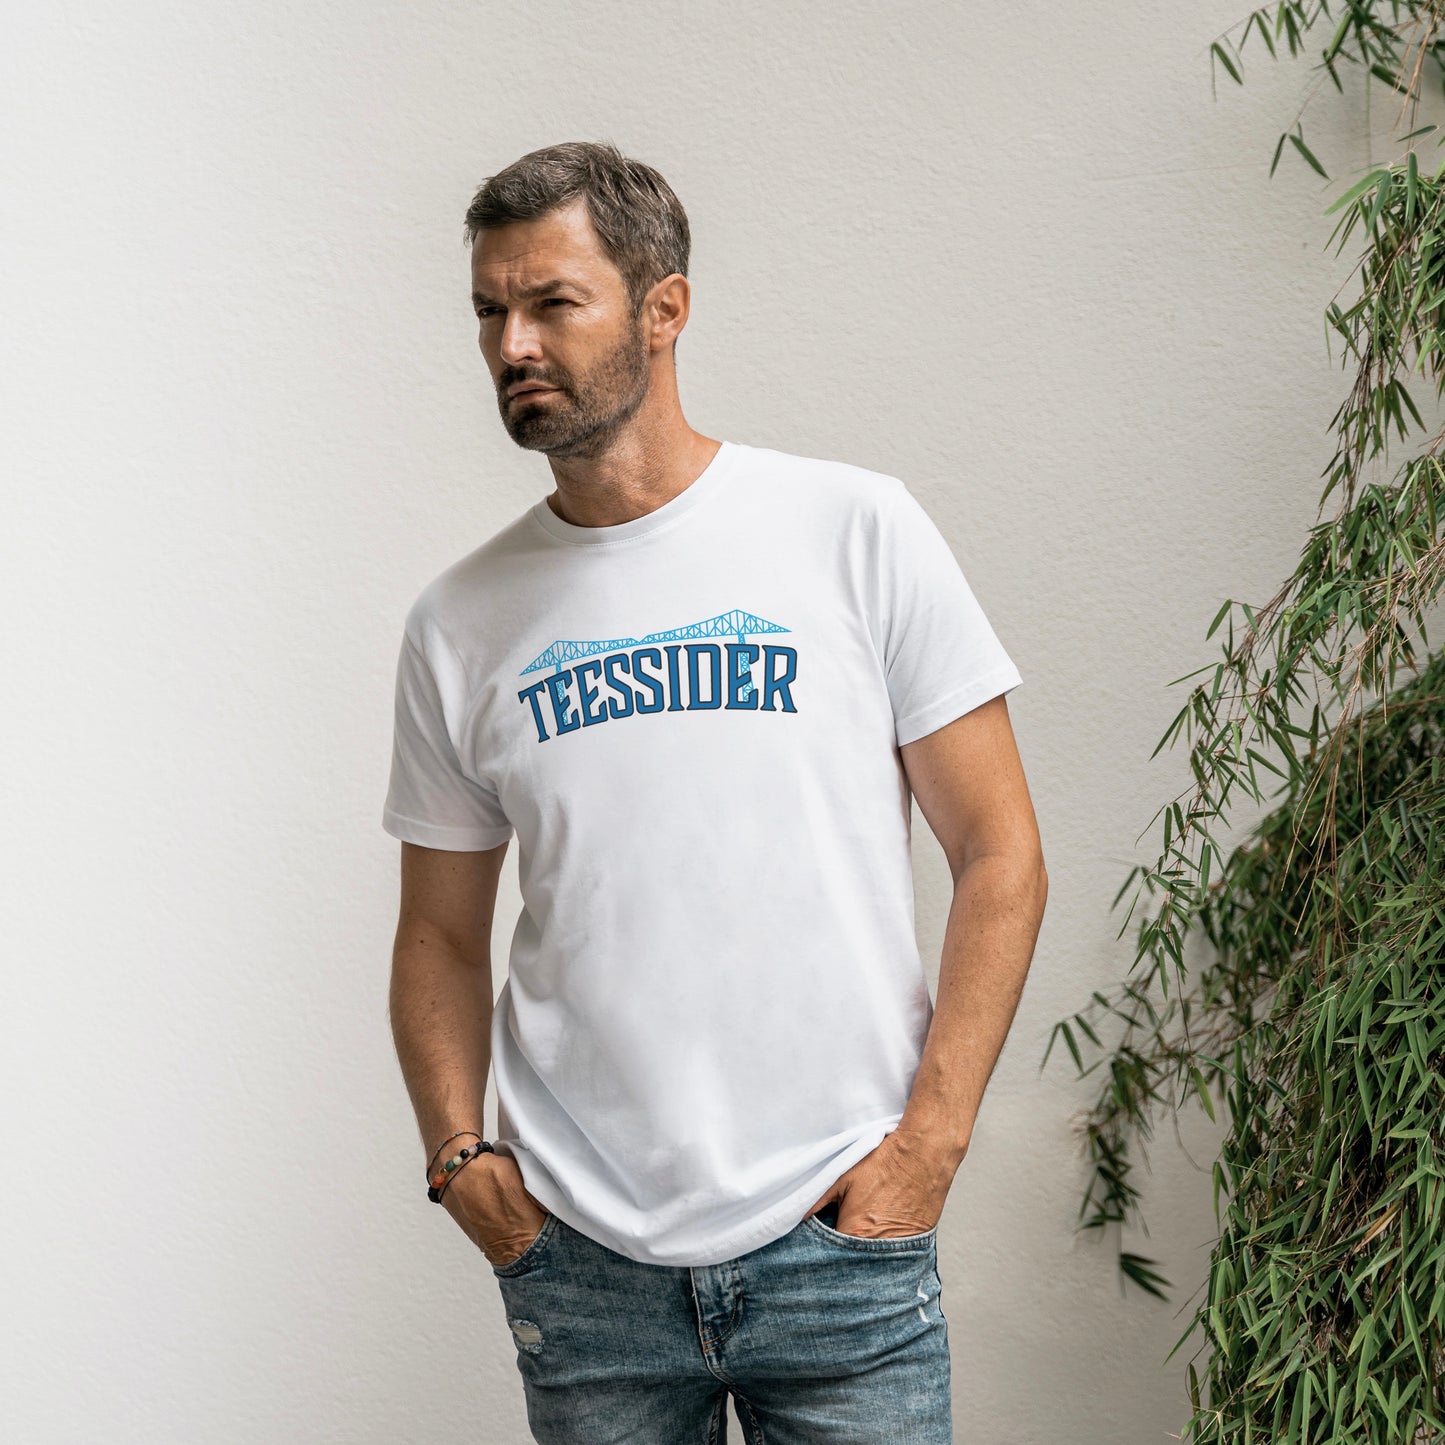 Teessider Transporter Crewneck T-shirt